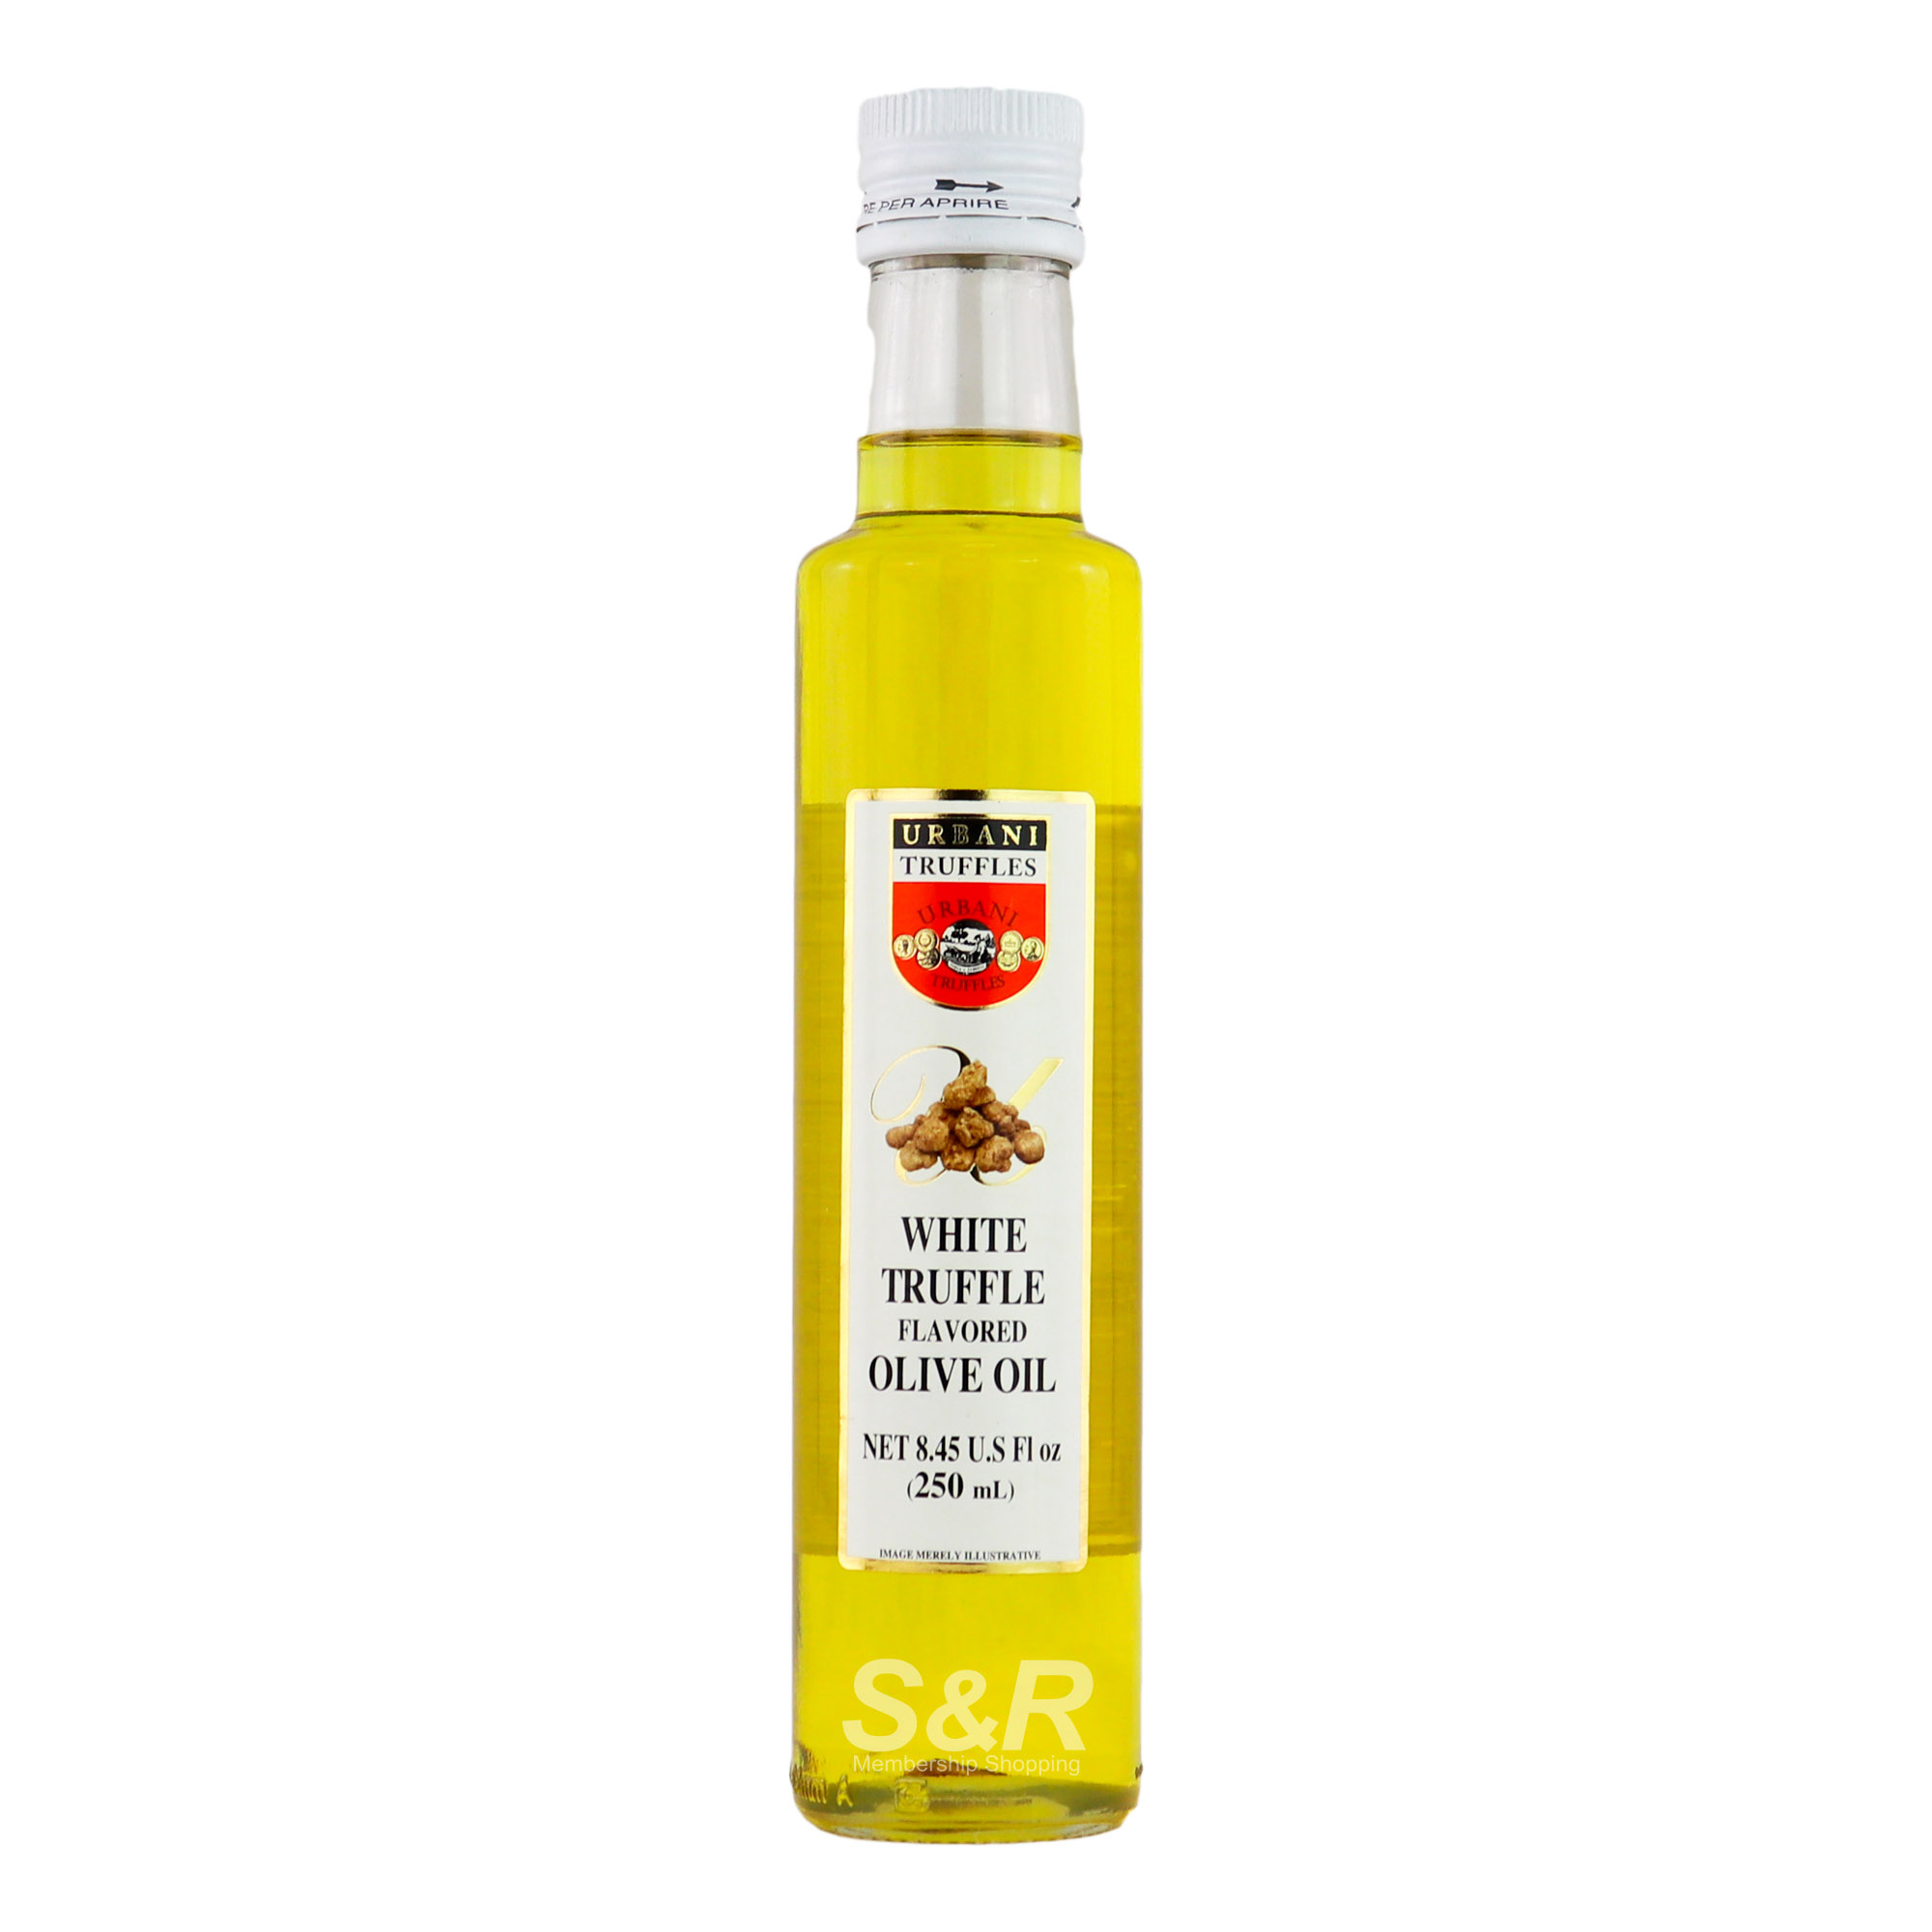 Urbani Truffles White Truffle Flavored Olive Oil 250mL